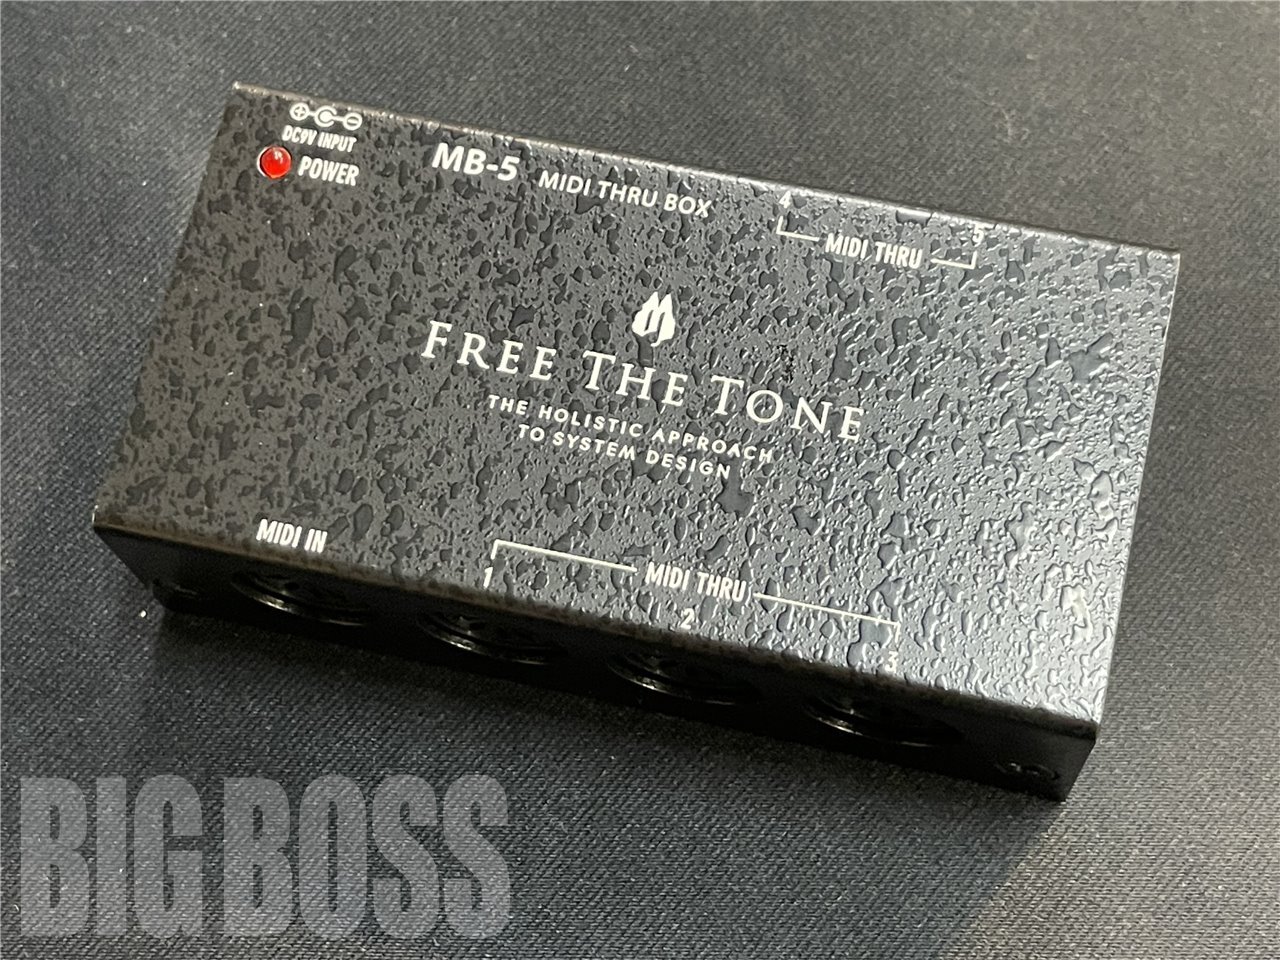 free the tone MB-5